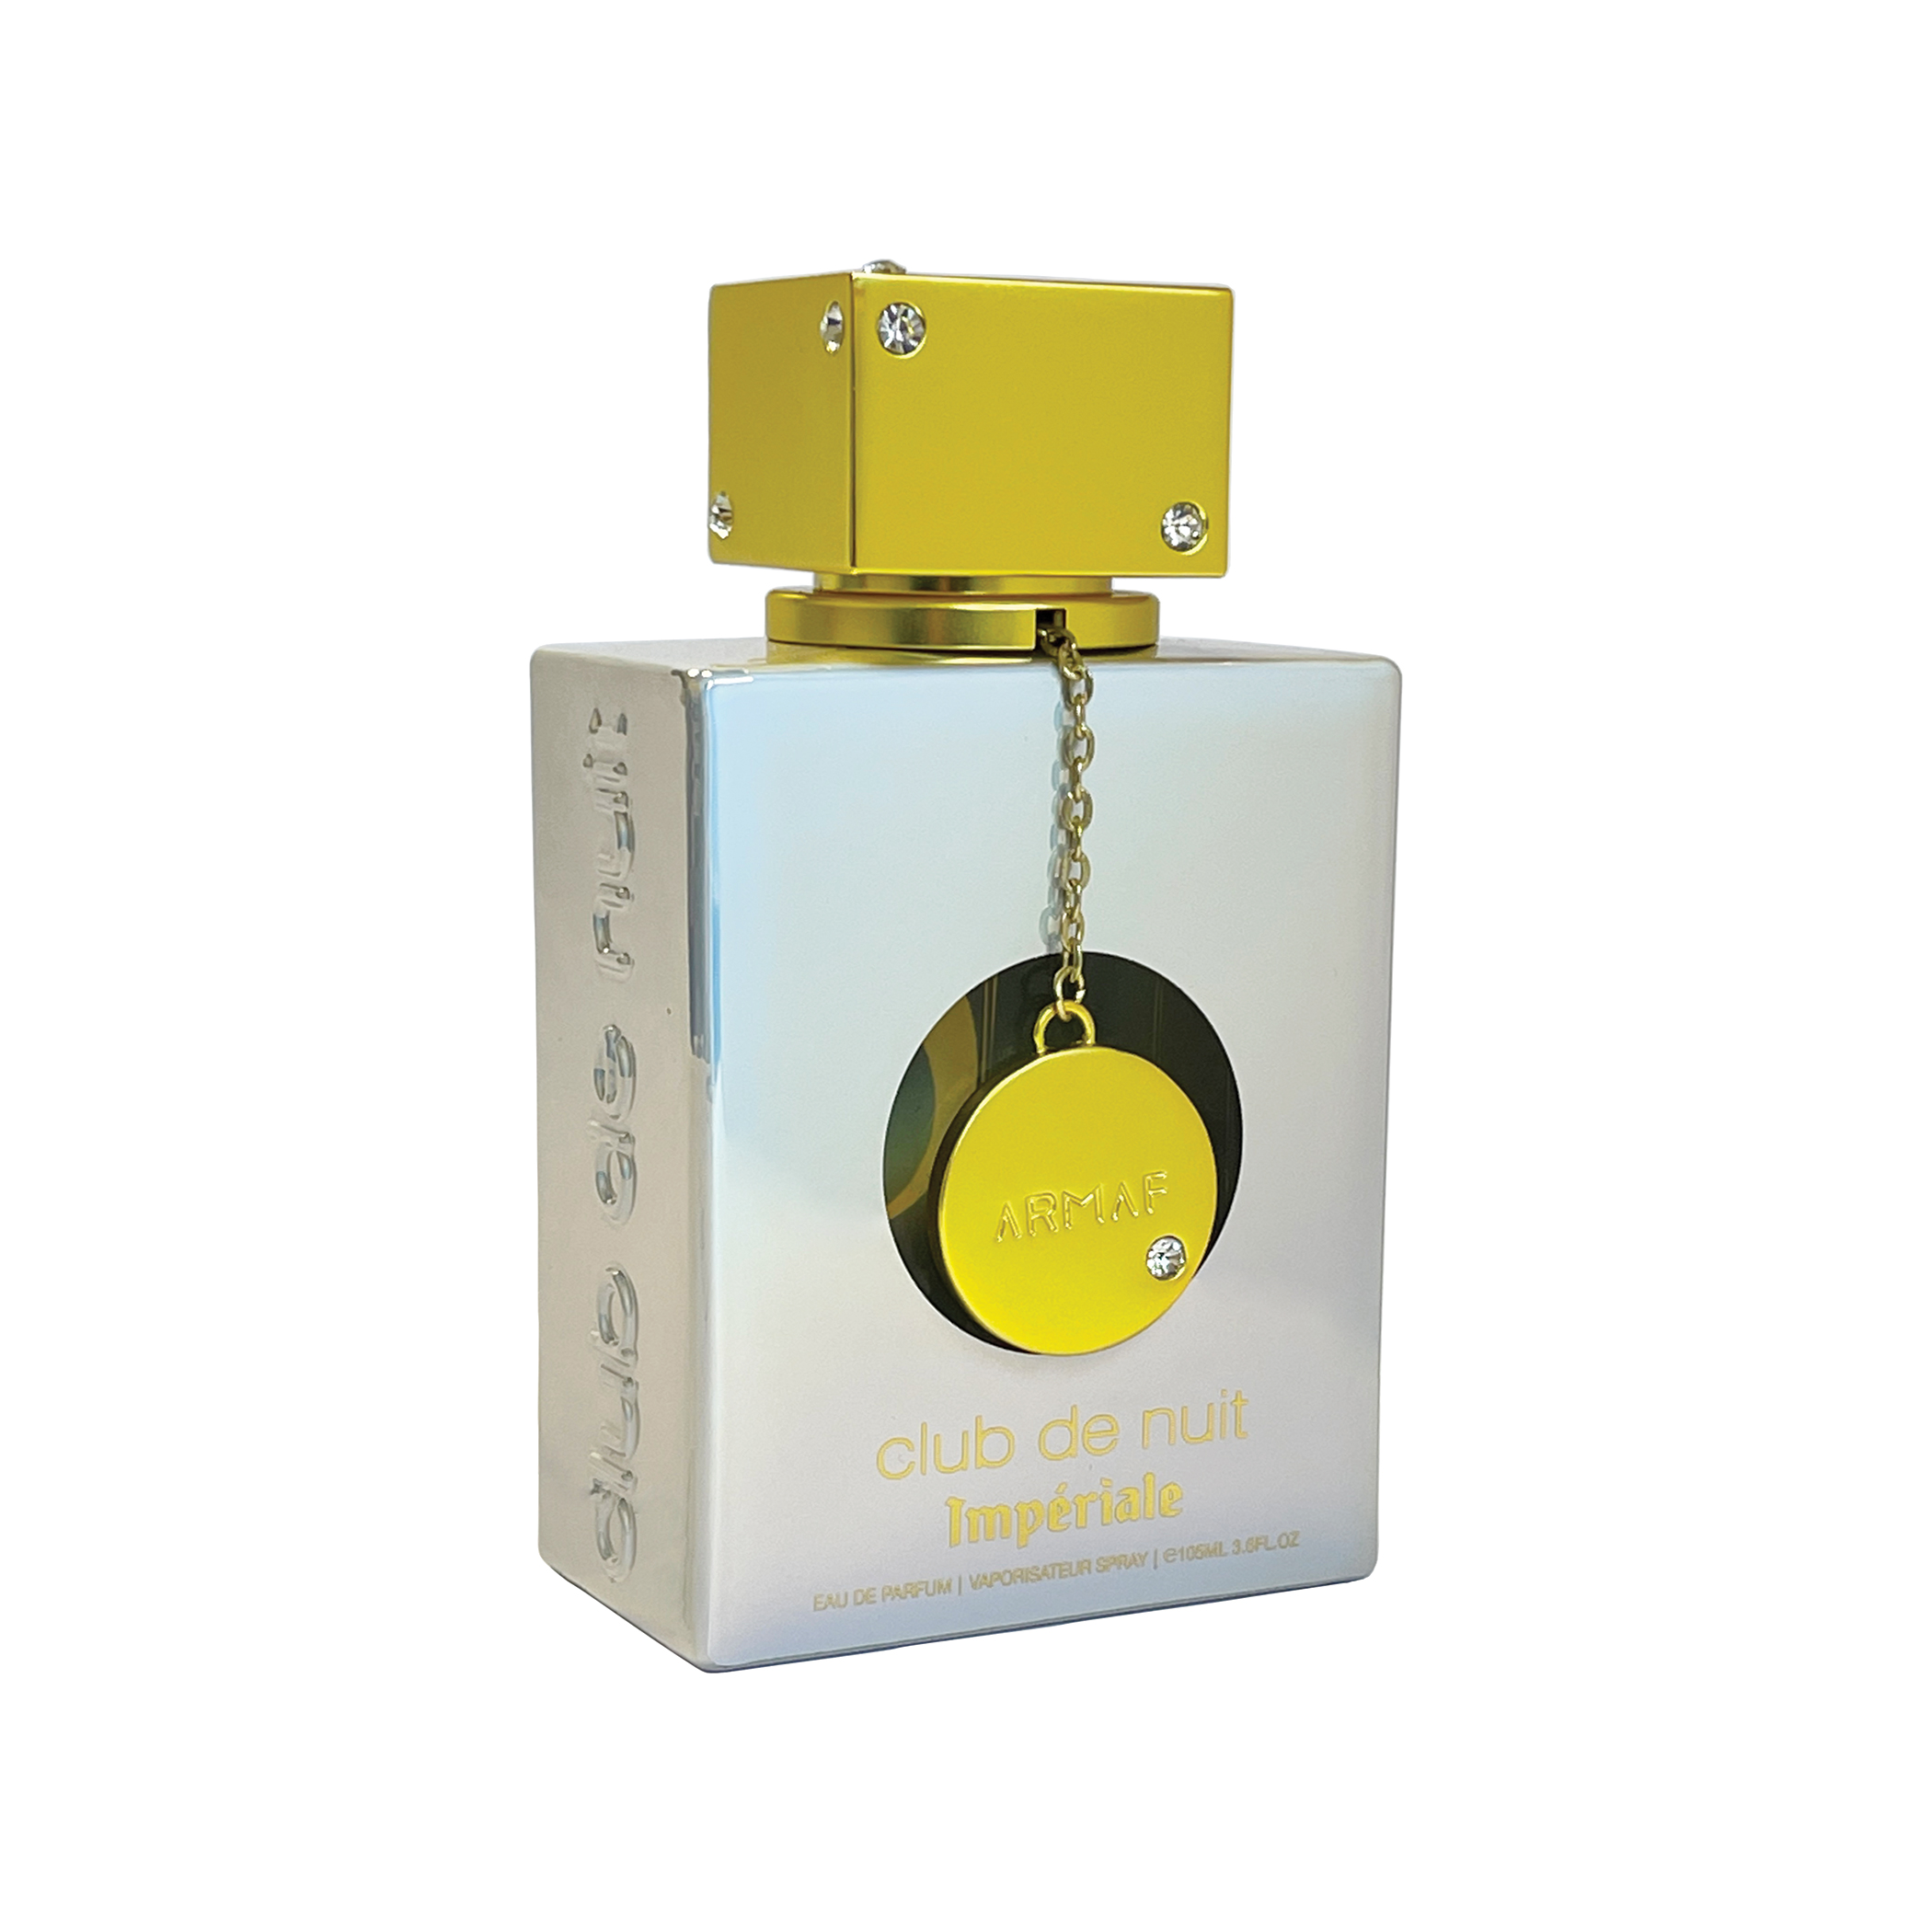 Perfume Arabe club de nuit white imperiale de armaf para mujer, 100ml, El Mejor Perfume y perfumes y marcas